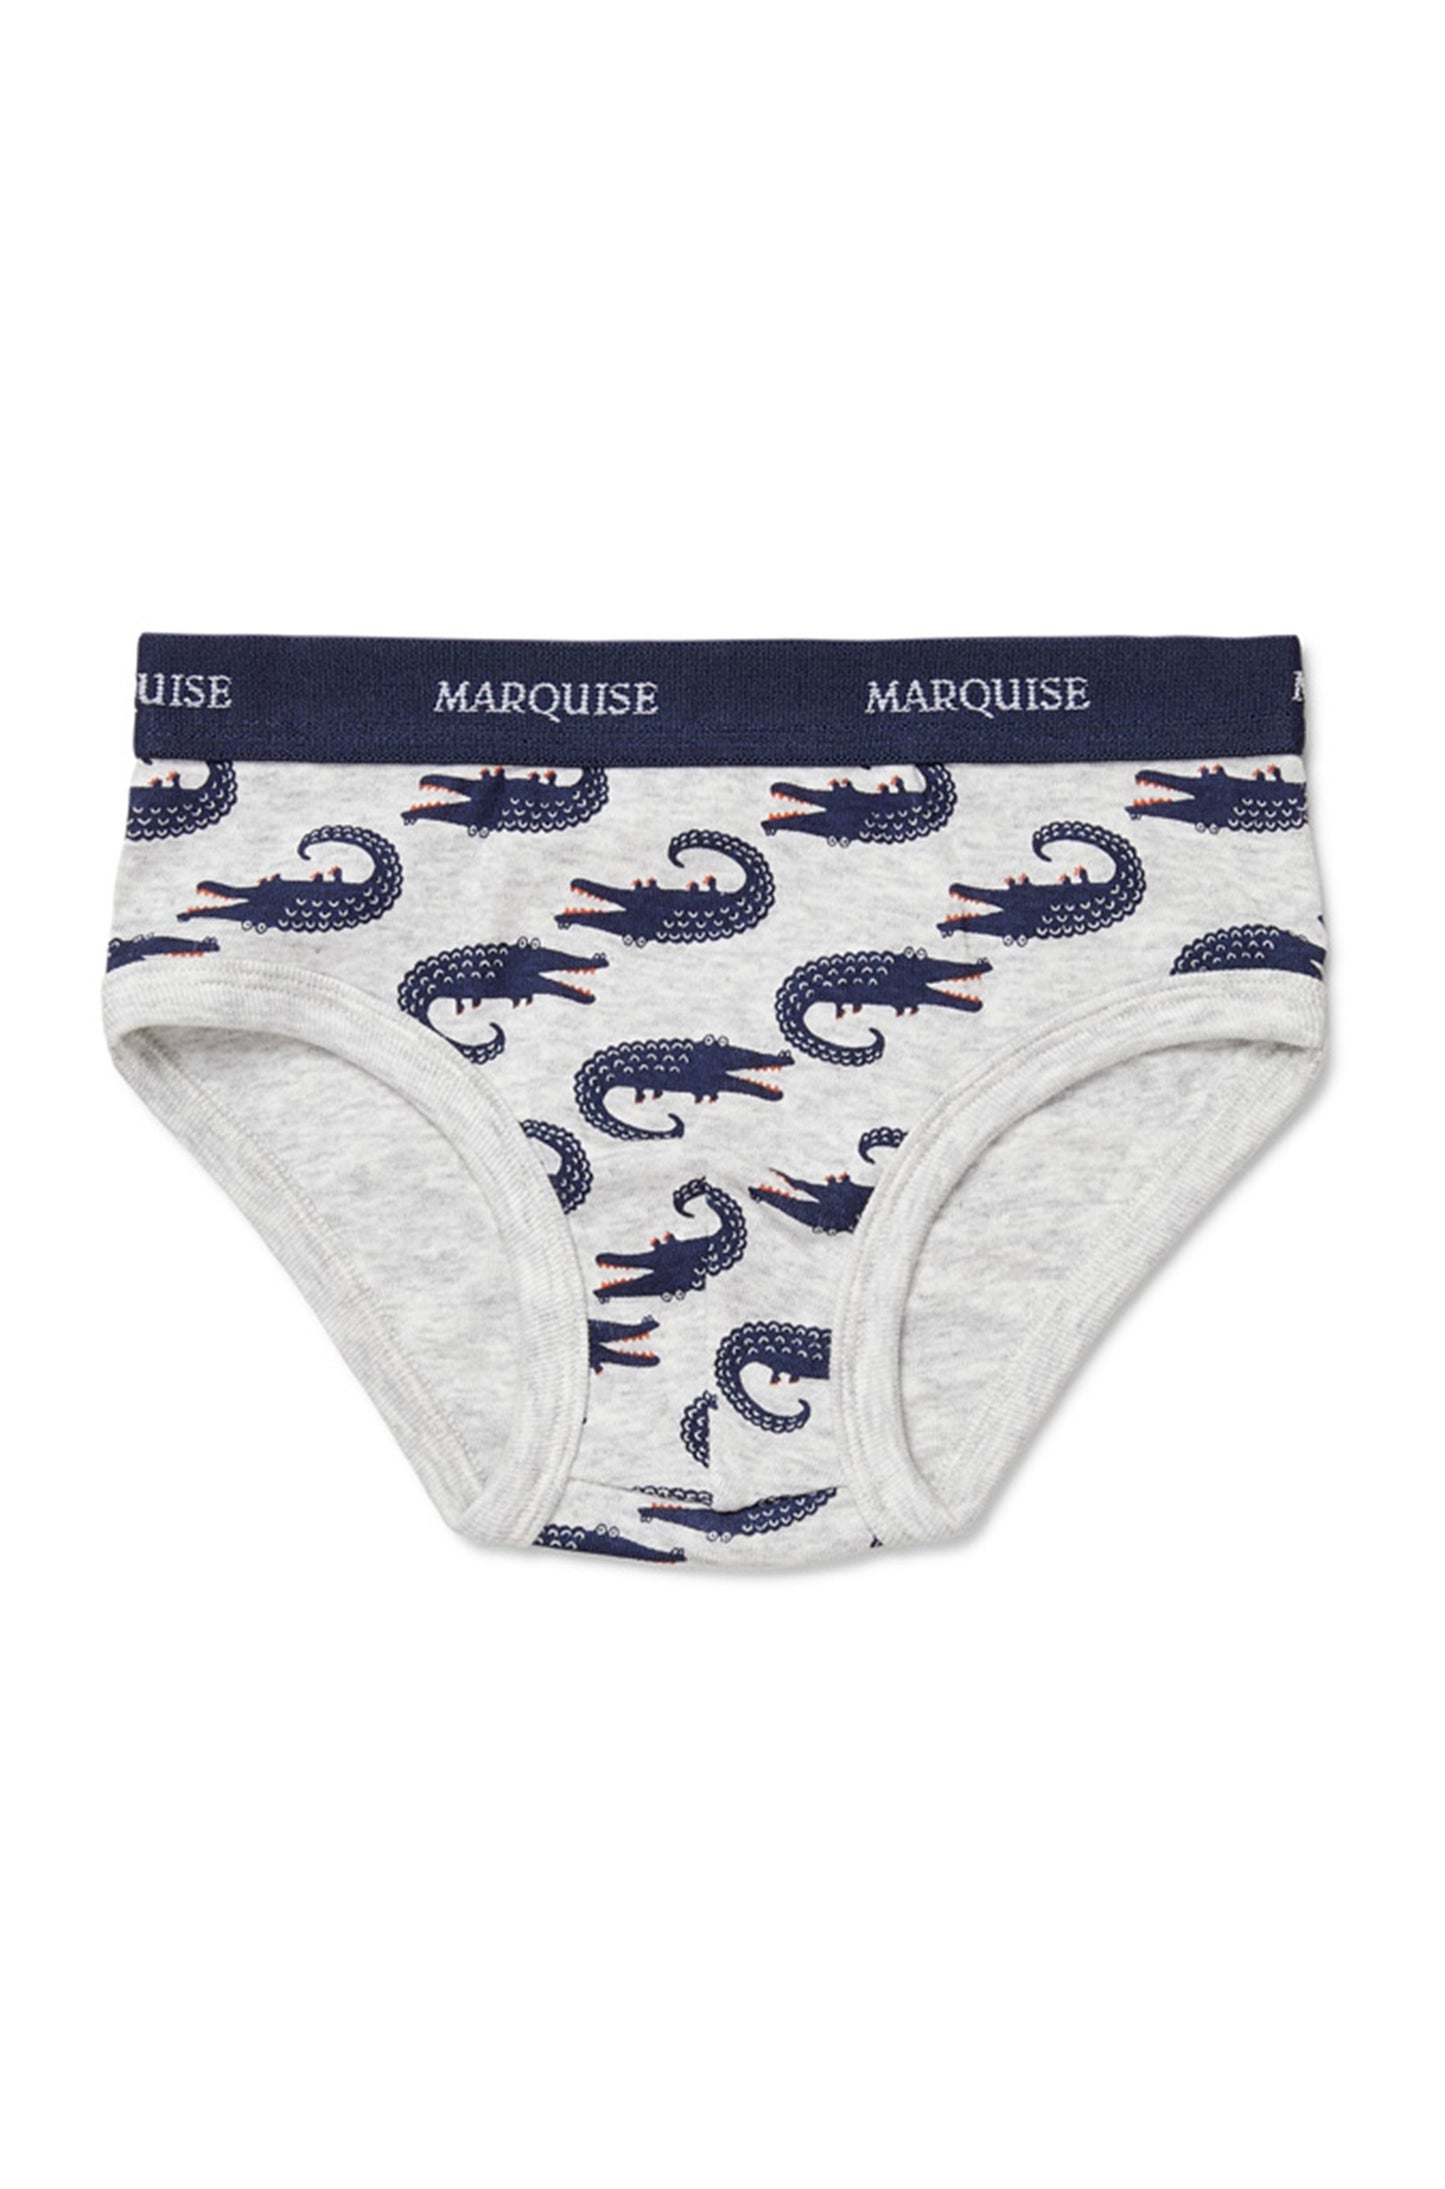 Marquise Boys Underwear - 2 pk - Crocodiles